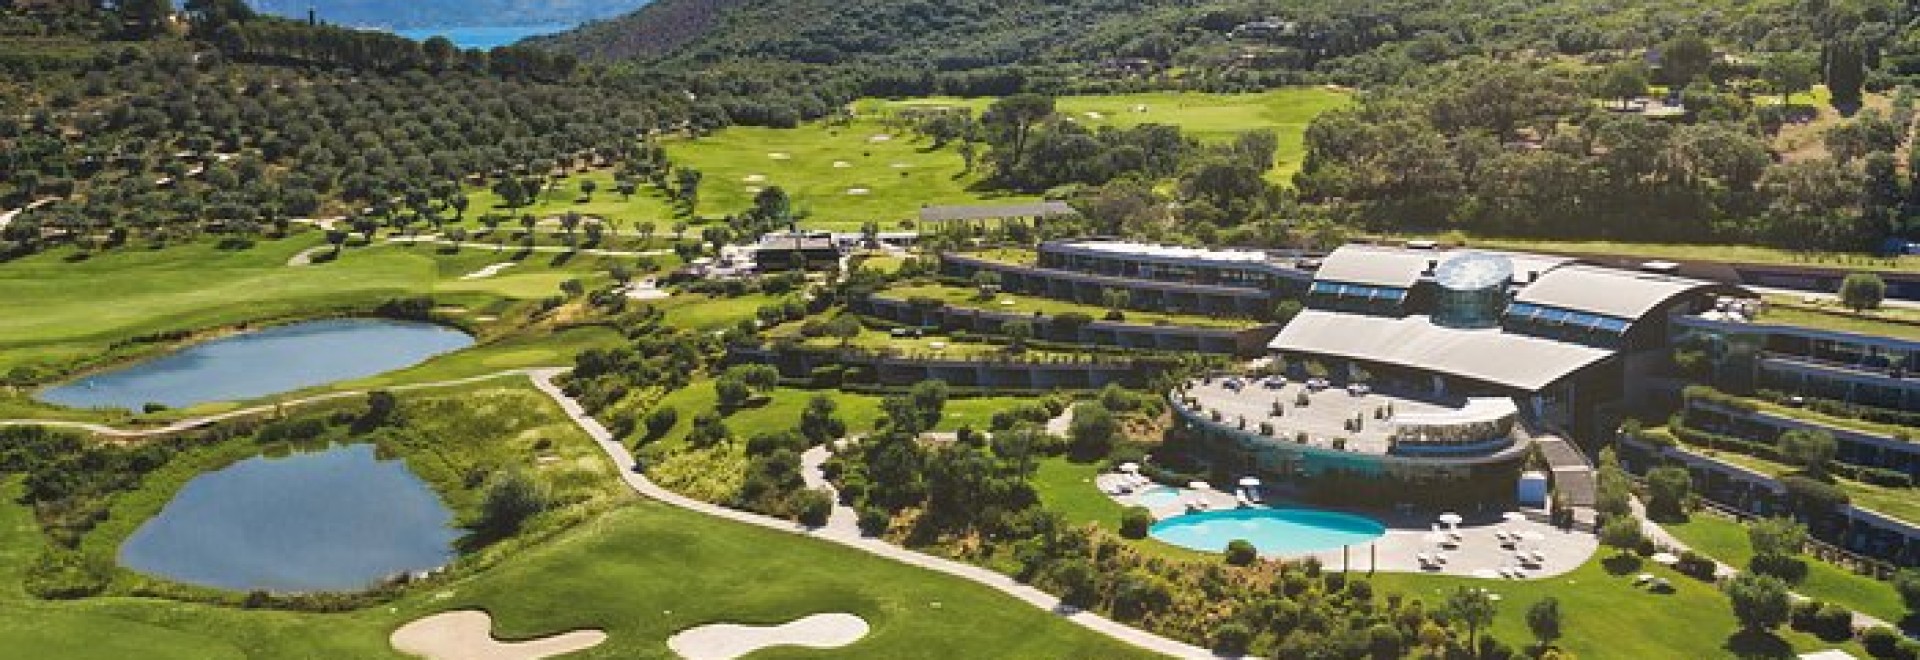 Argentario Golf Resort & Spa, Italy - Book. Travel. Play.